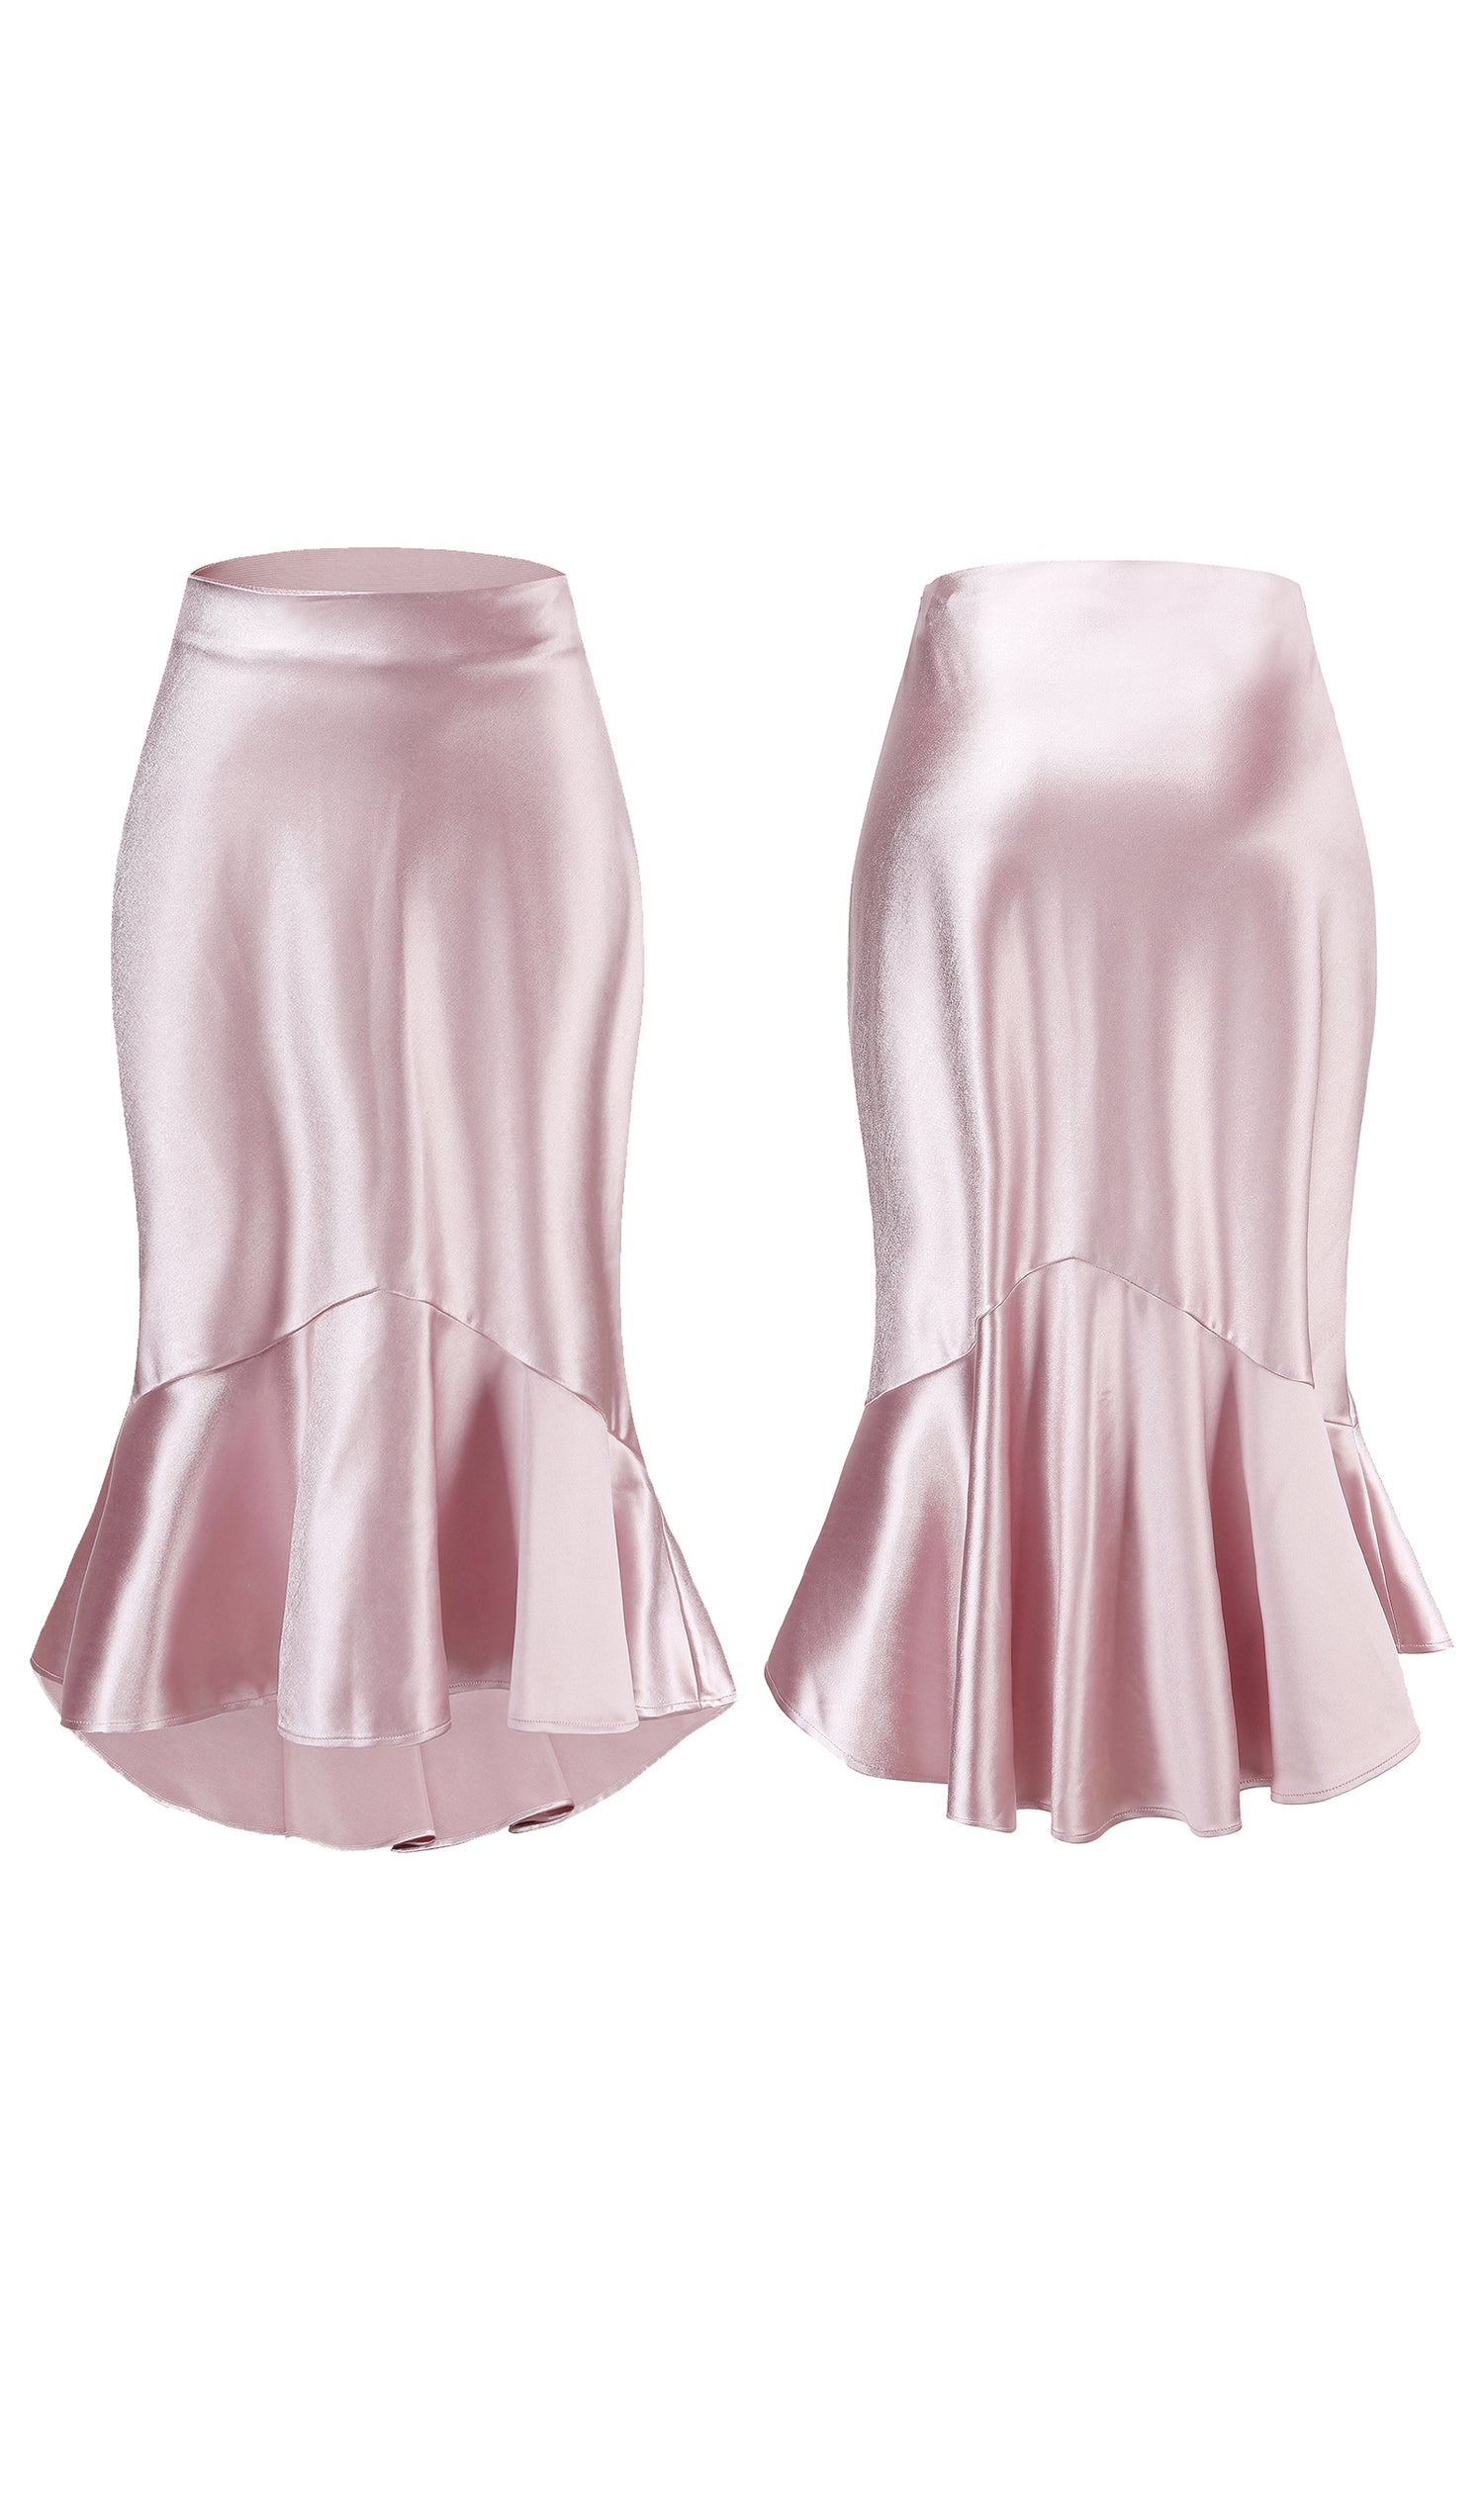 ALCEA ROSEA Women High Waist Satin Skirt Fishtail Silky Skirts Bodycon Stretchy Mermaid Pencil Midi Skirt Pink